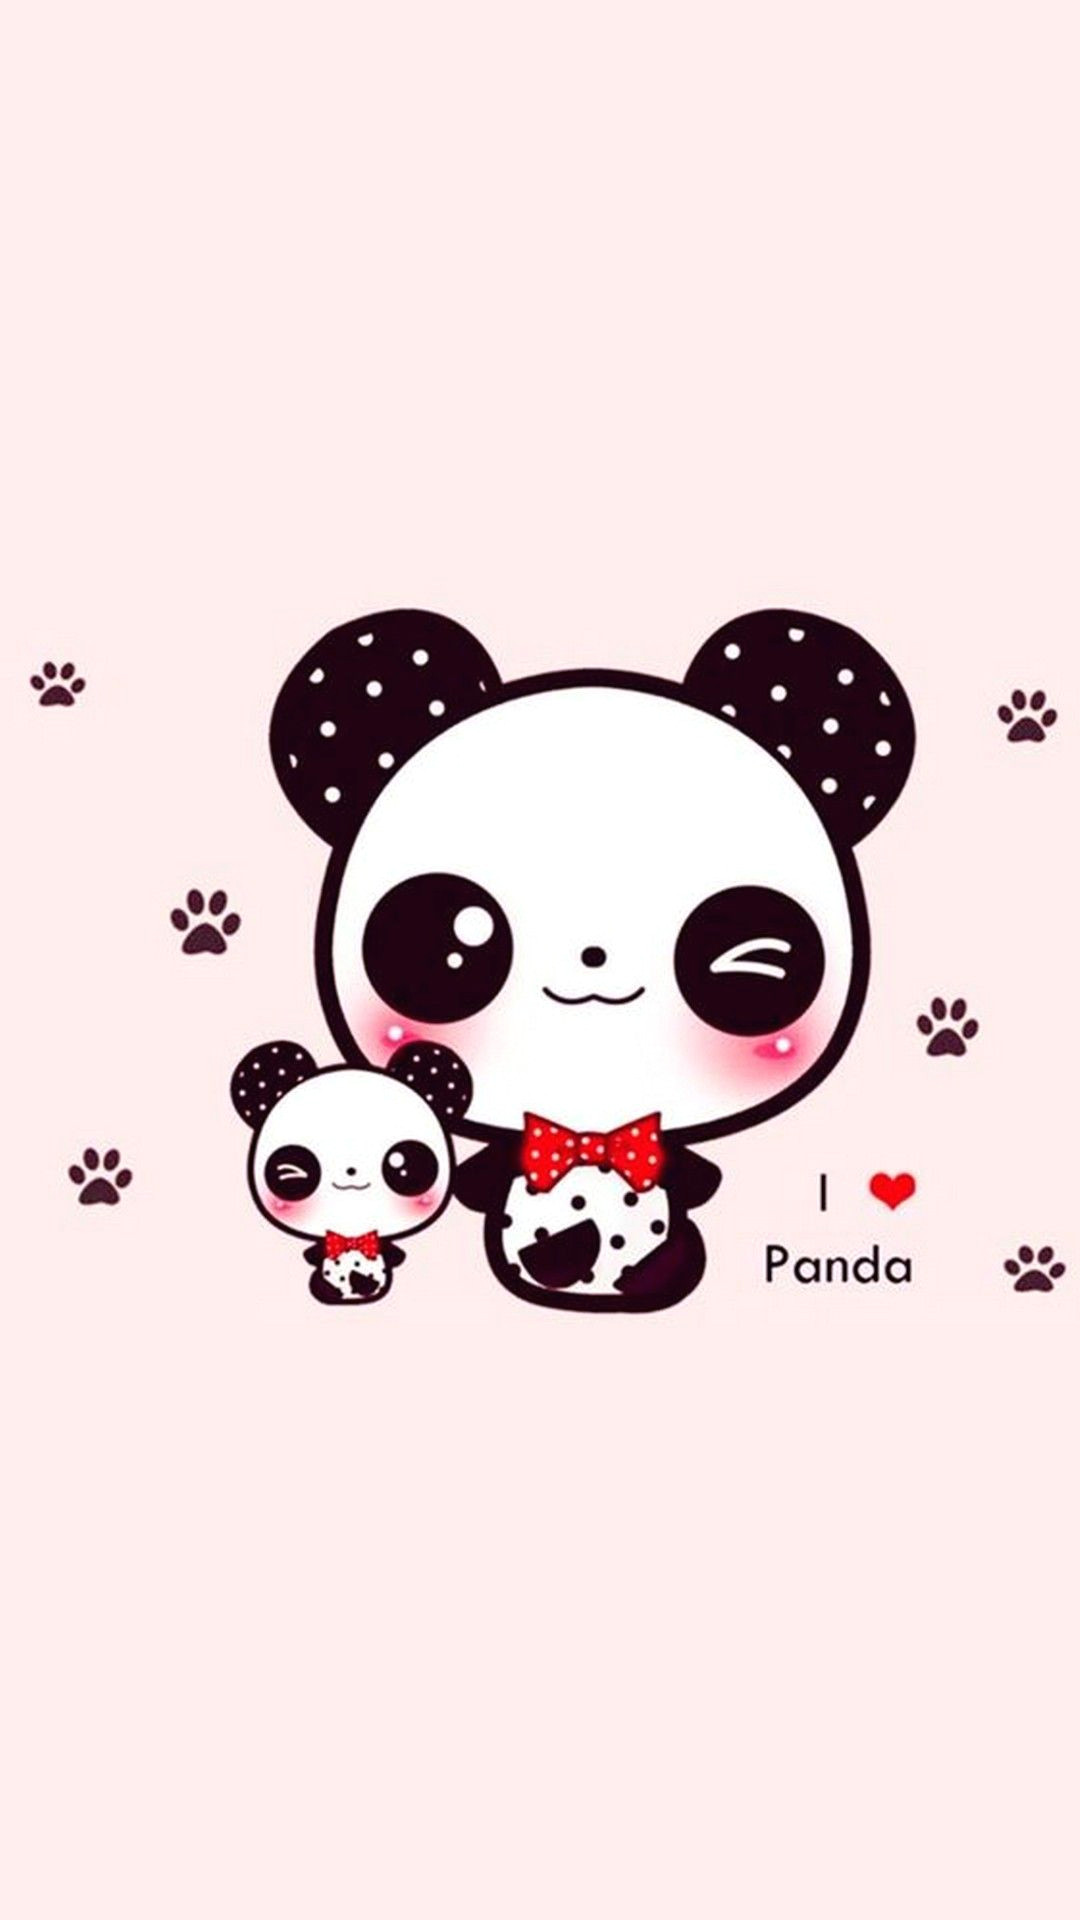 Drawing Of A Cartoon Panda Cute Panda Wallpaper for iPhone iPhonewallpapers Pinterest